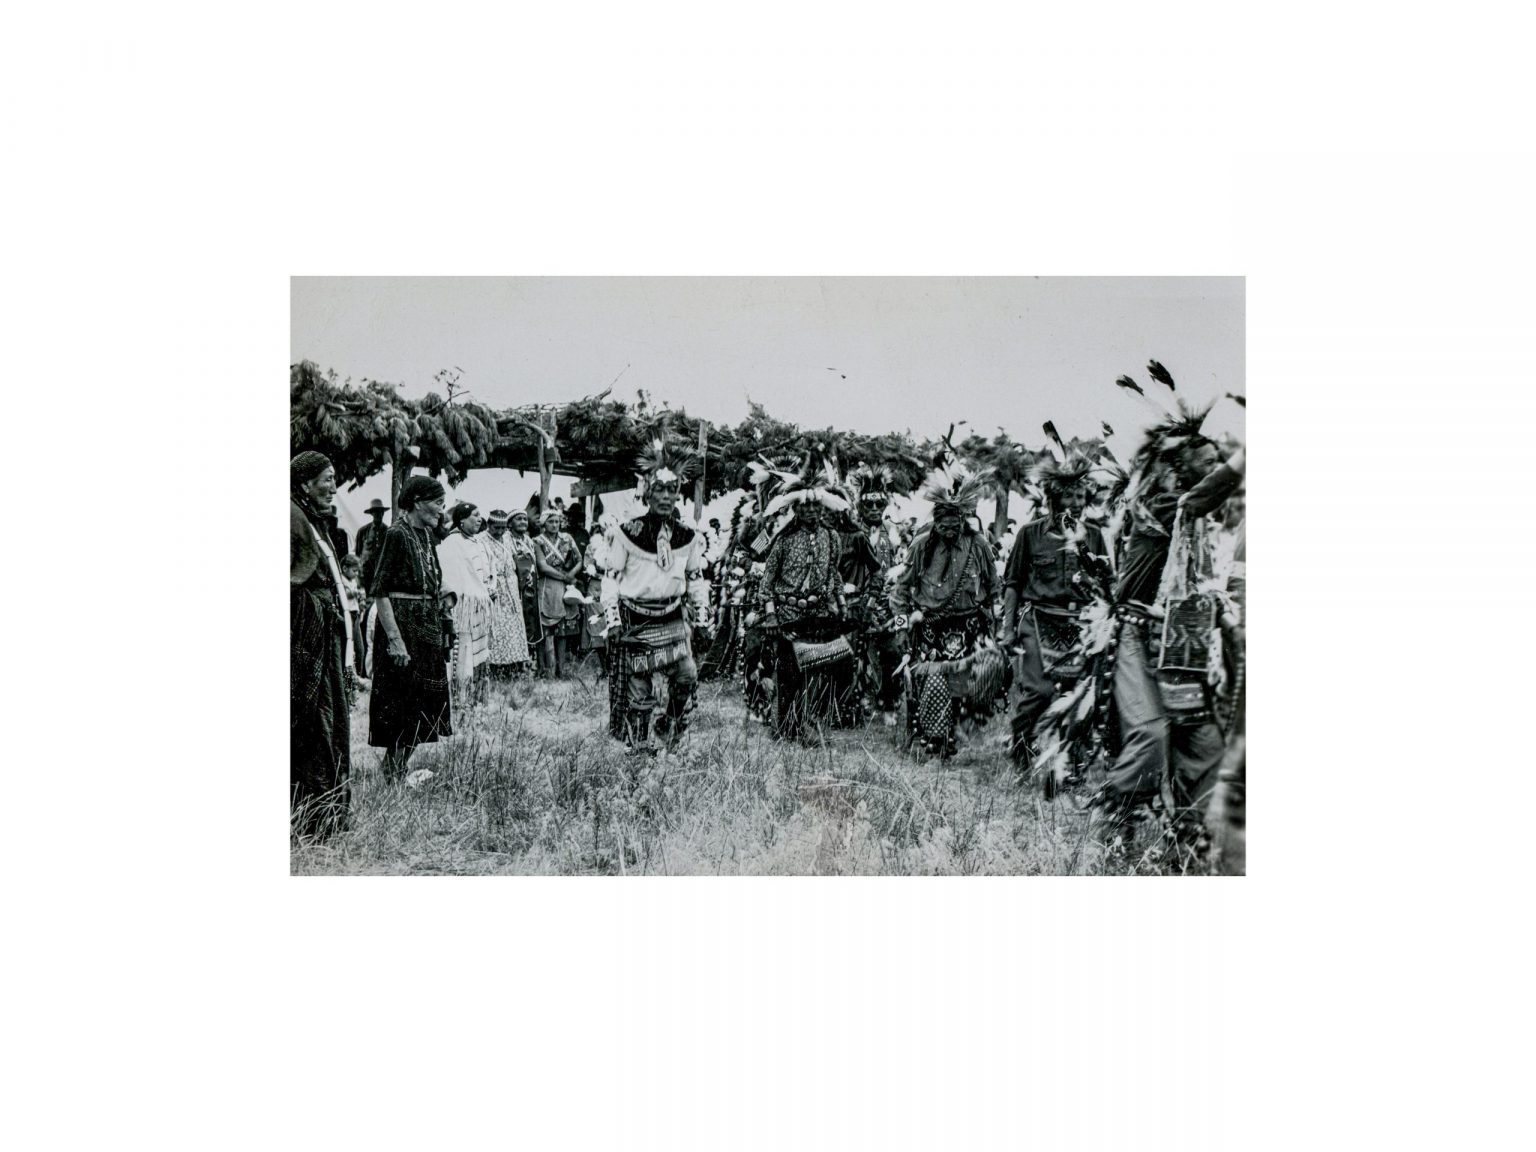 Sioux Indian dance photograph